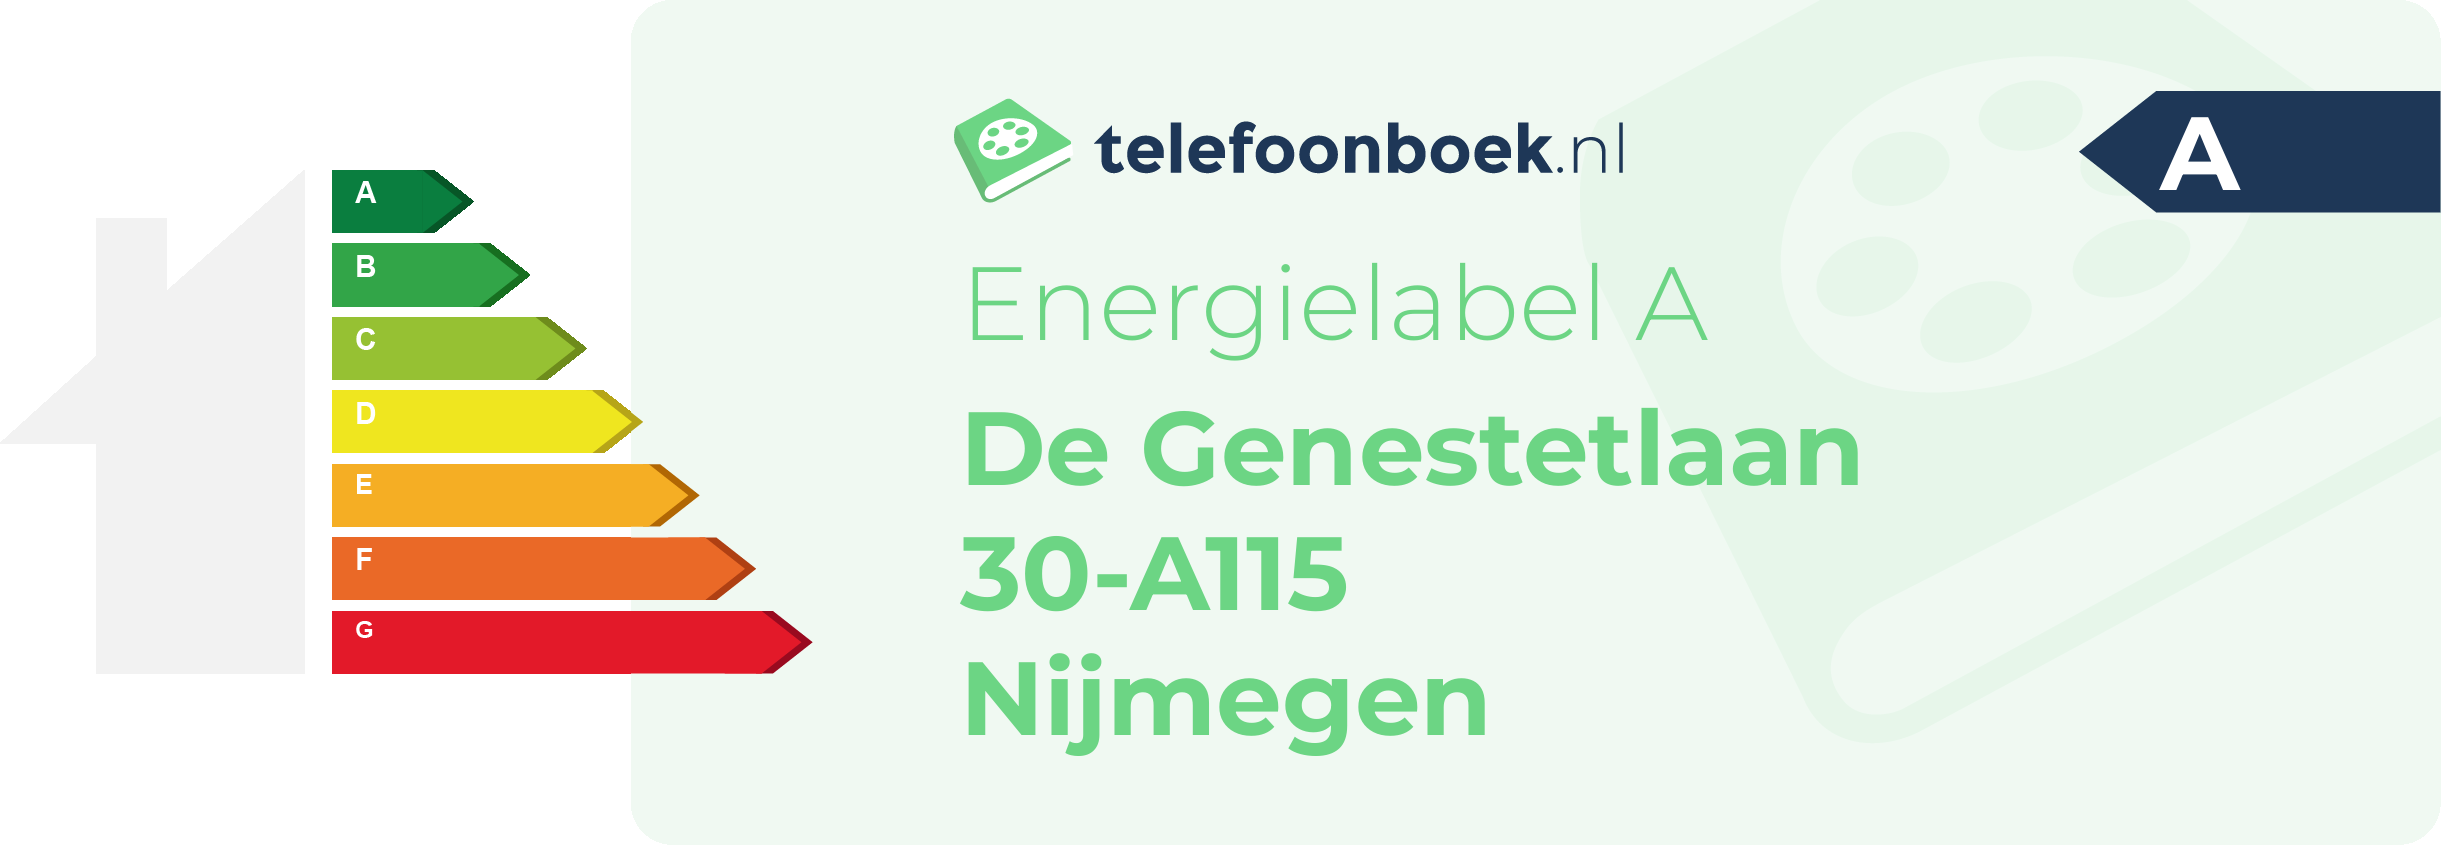 Energielabel De Genestetlaan 30-A115 Nijmegen